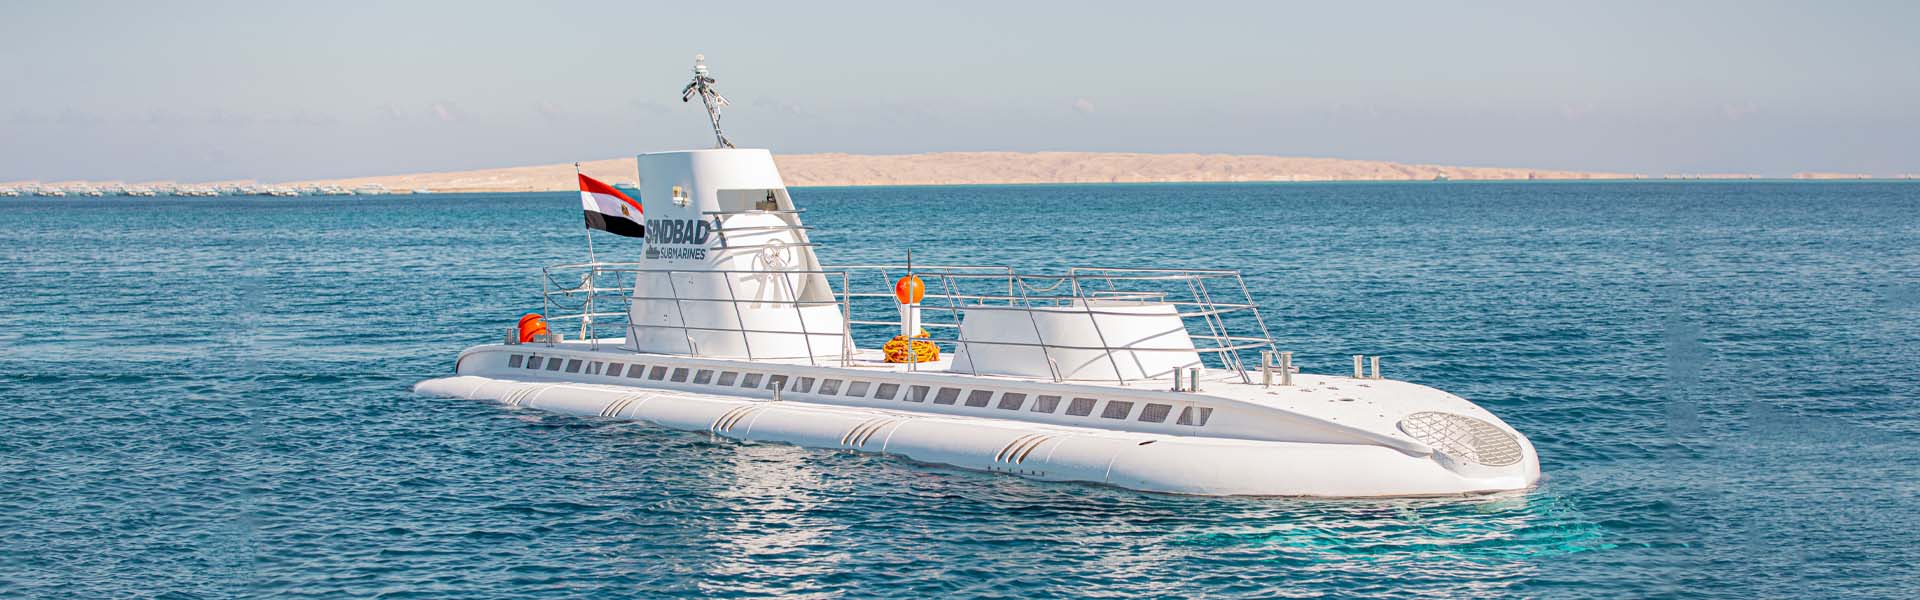 Sindbad Submarine in Hurghada